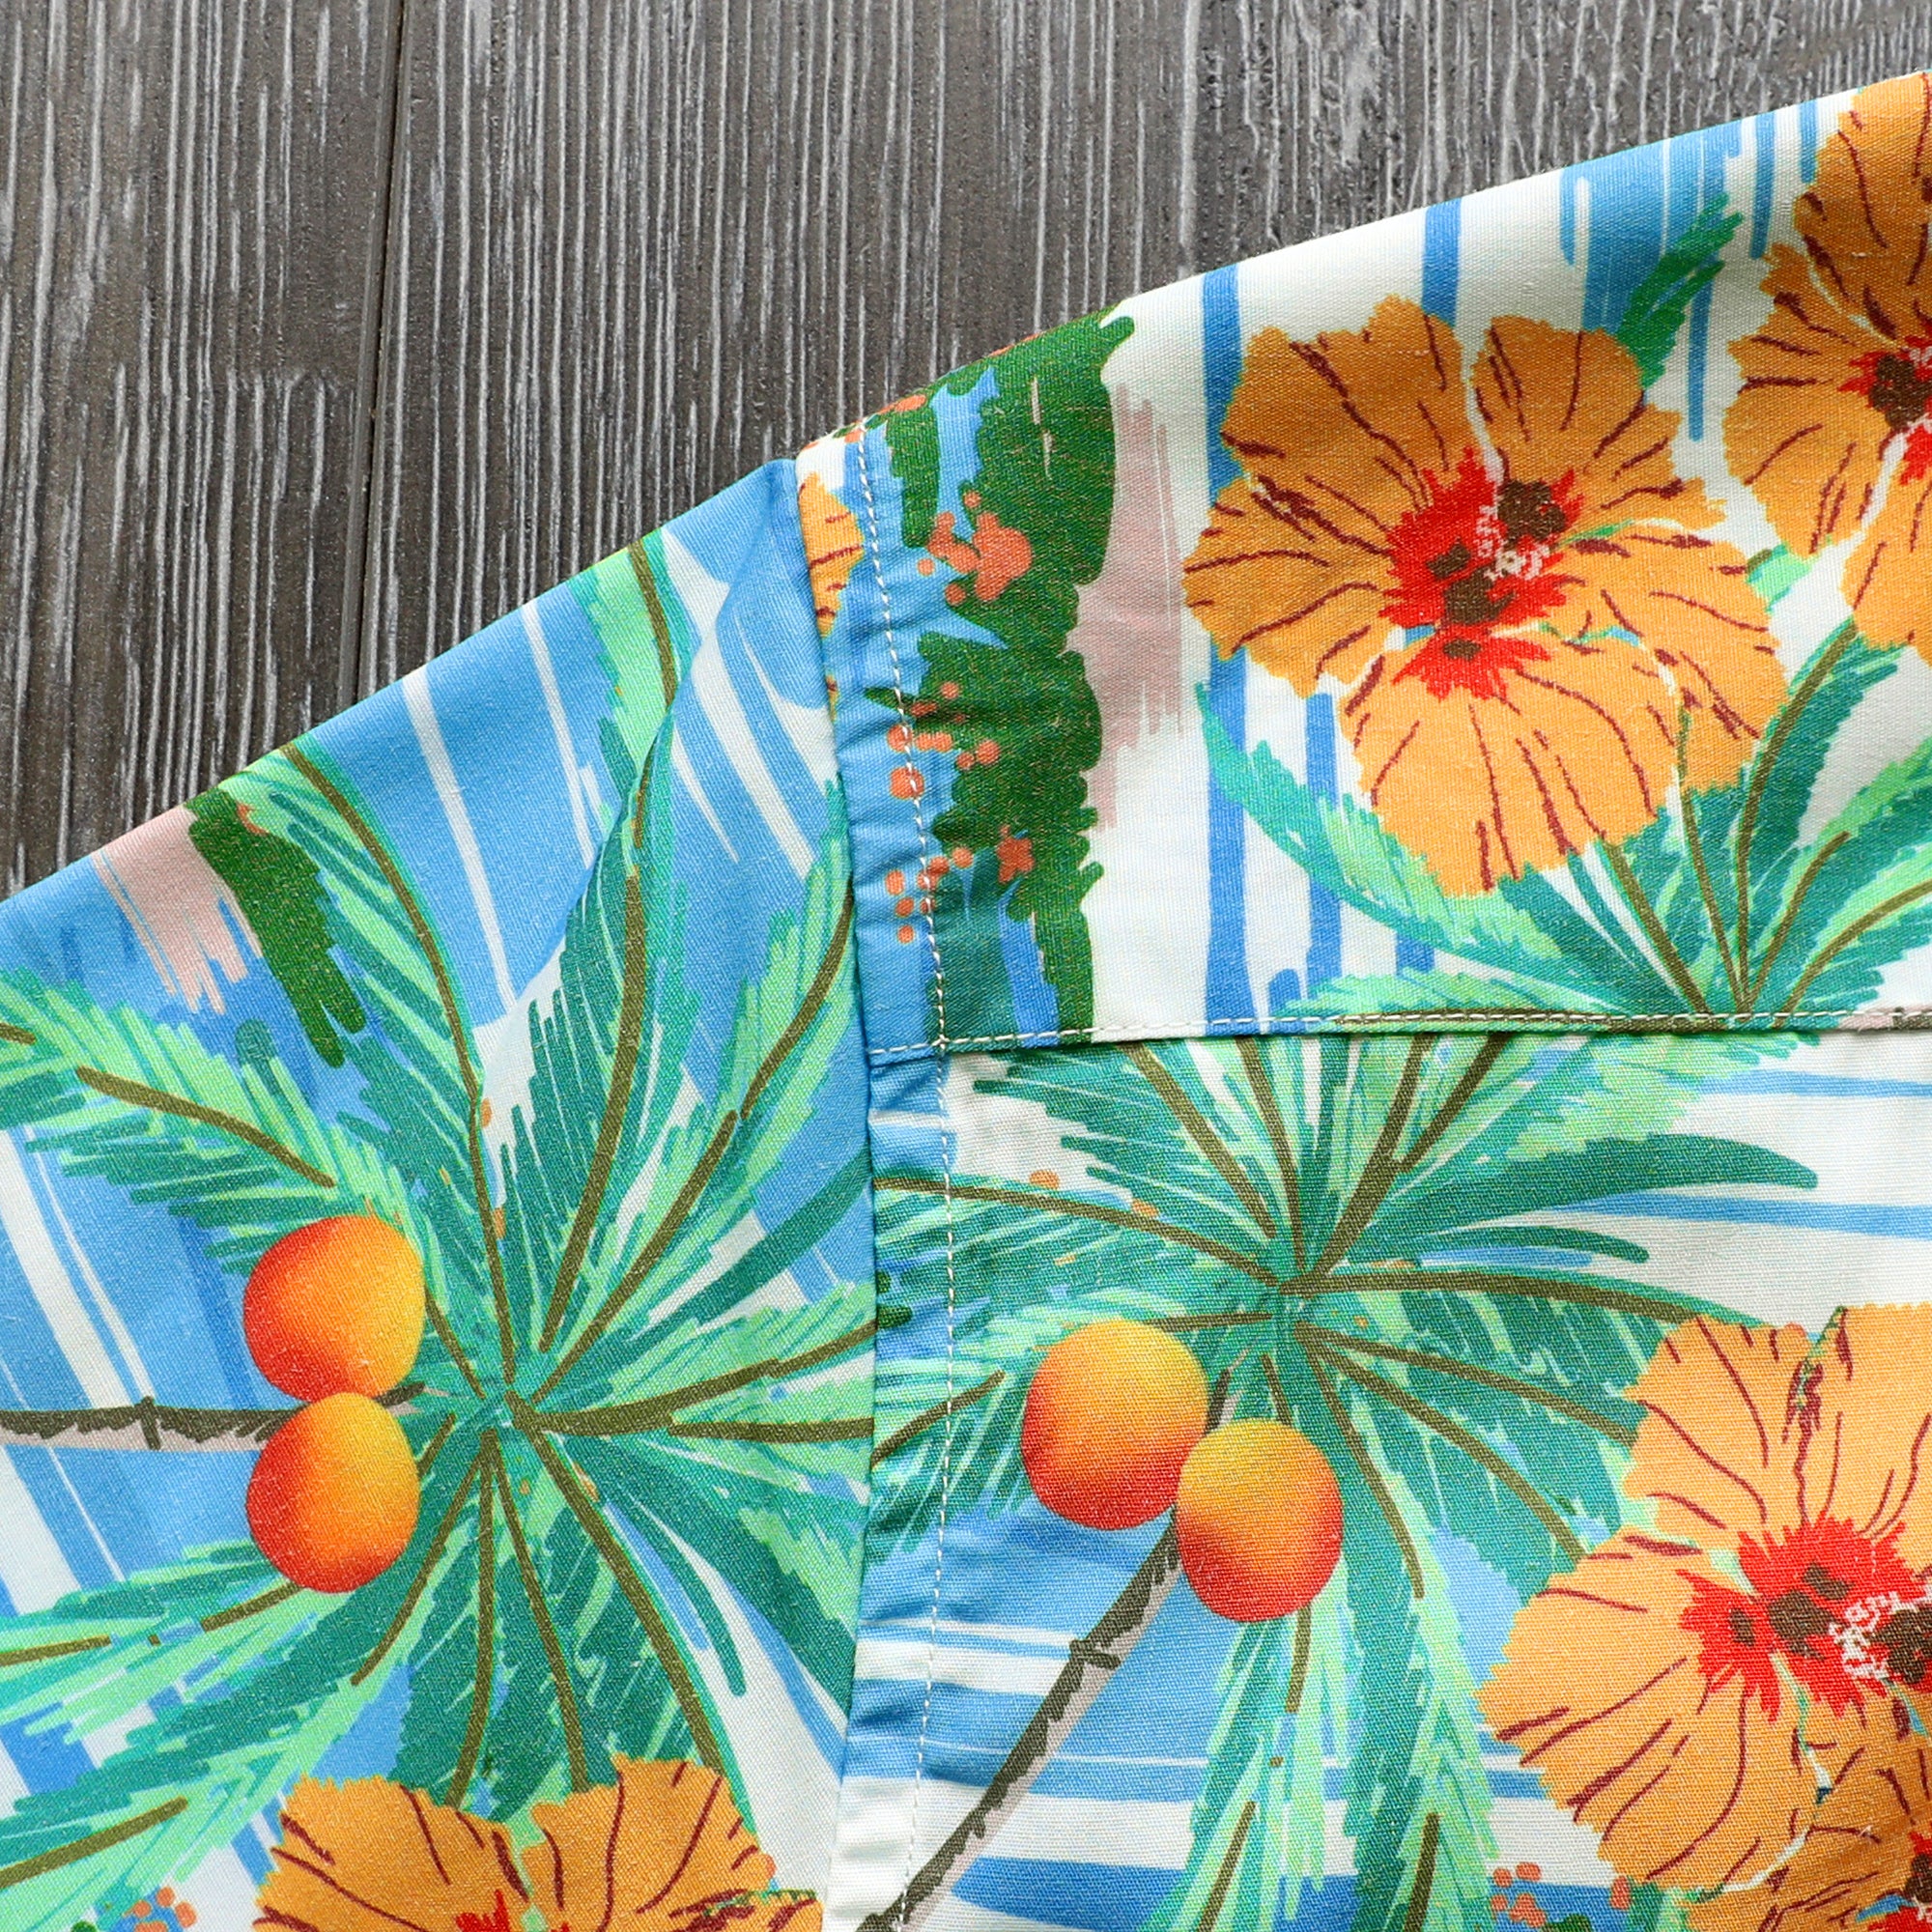 Hawaiian Shirt for Men Aloha Tropical Short Sleeve Button Down Print Beach Shirts #2602